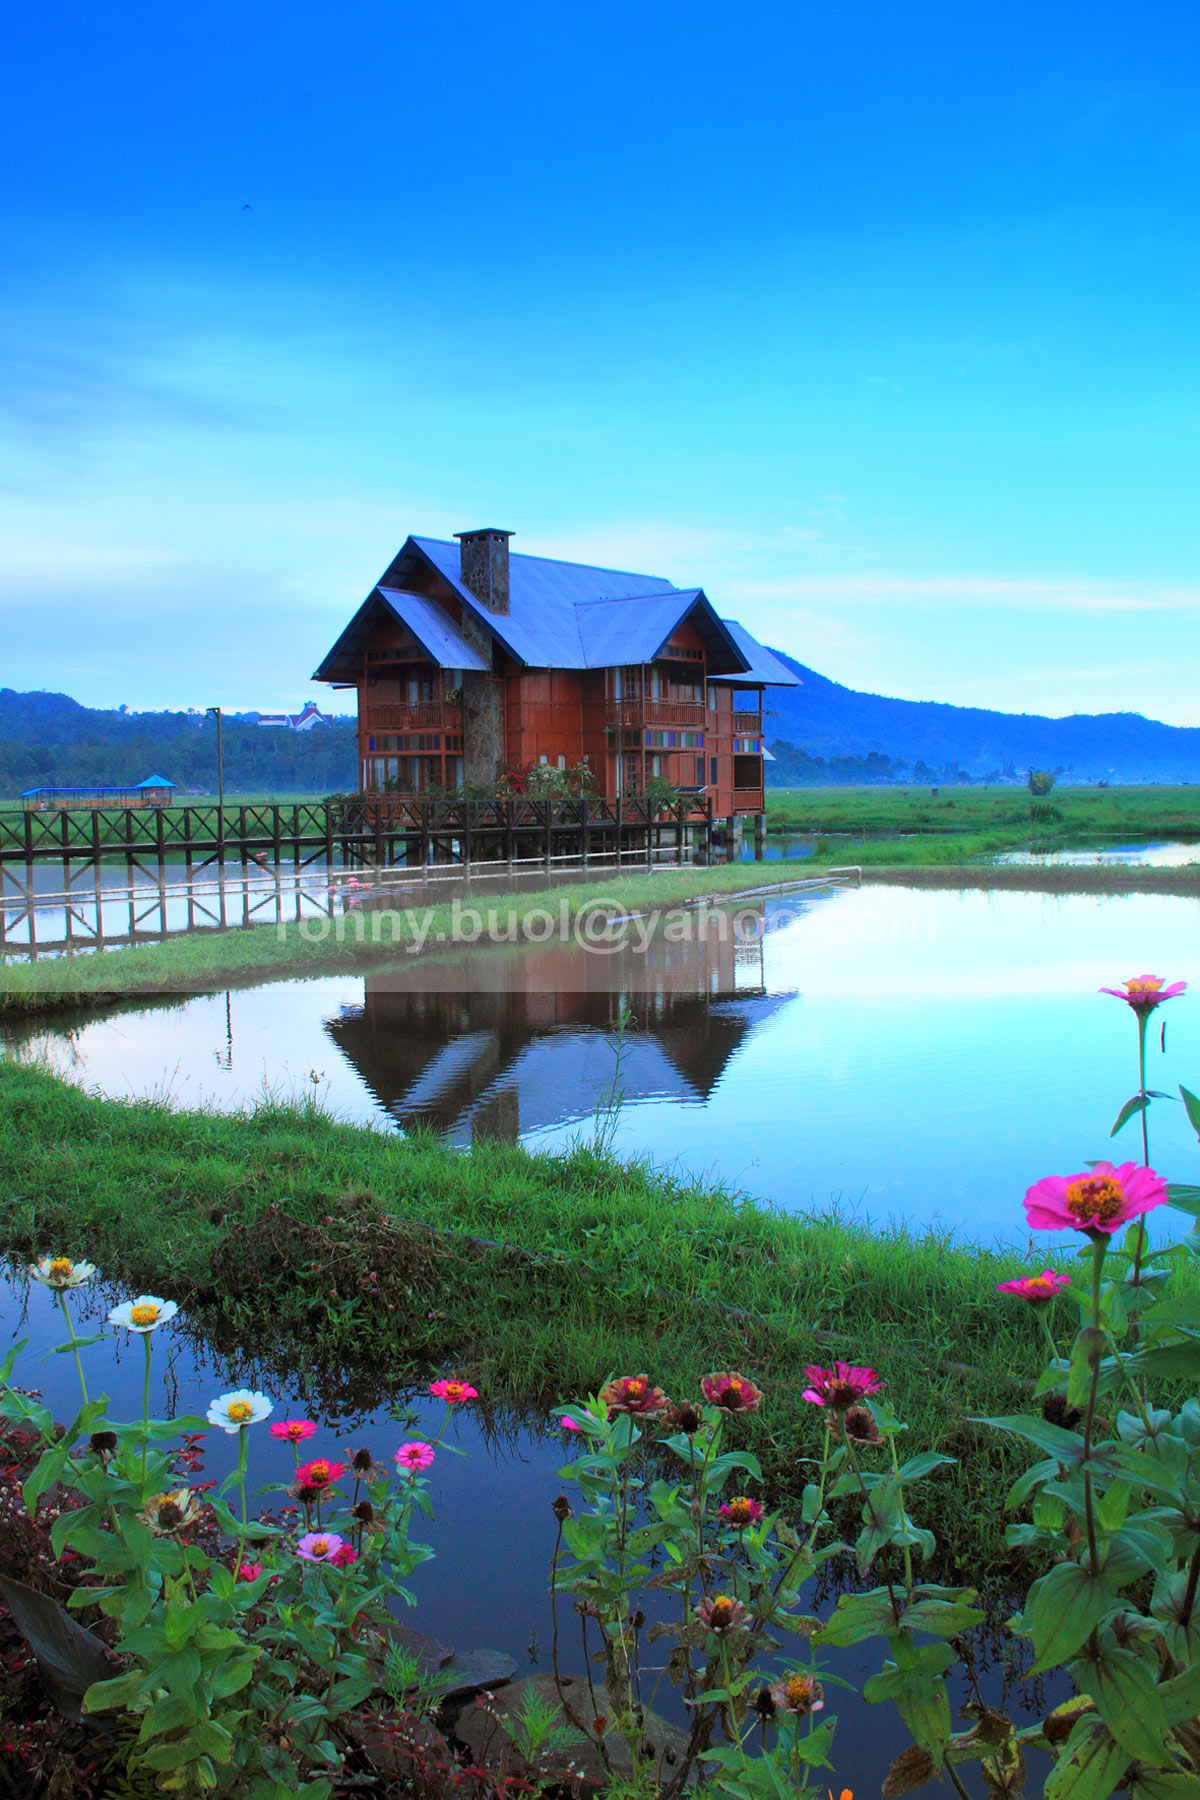 Foto Rumah Belanda Di Tepi Danau Tondano Blog Ronny Buol